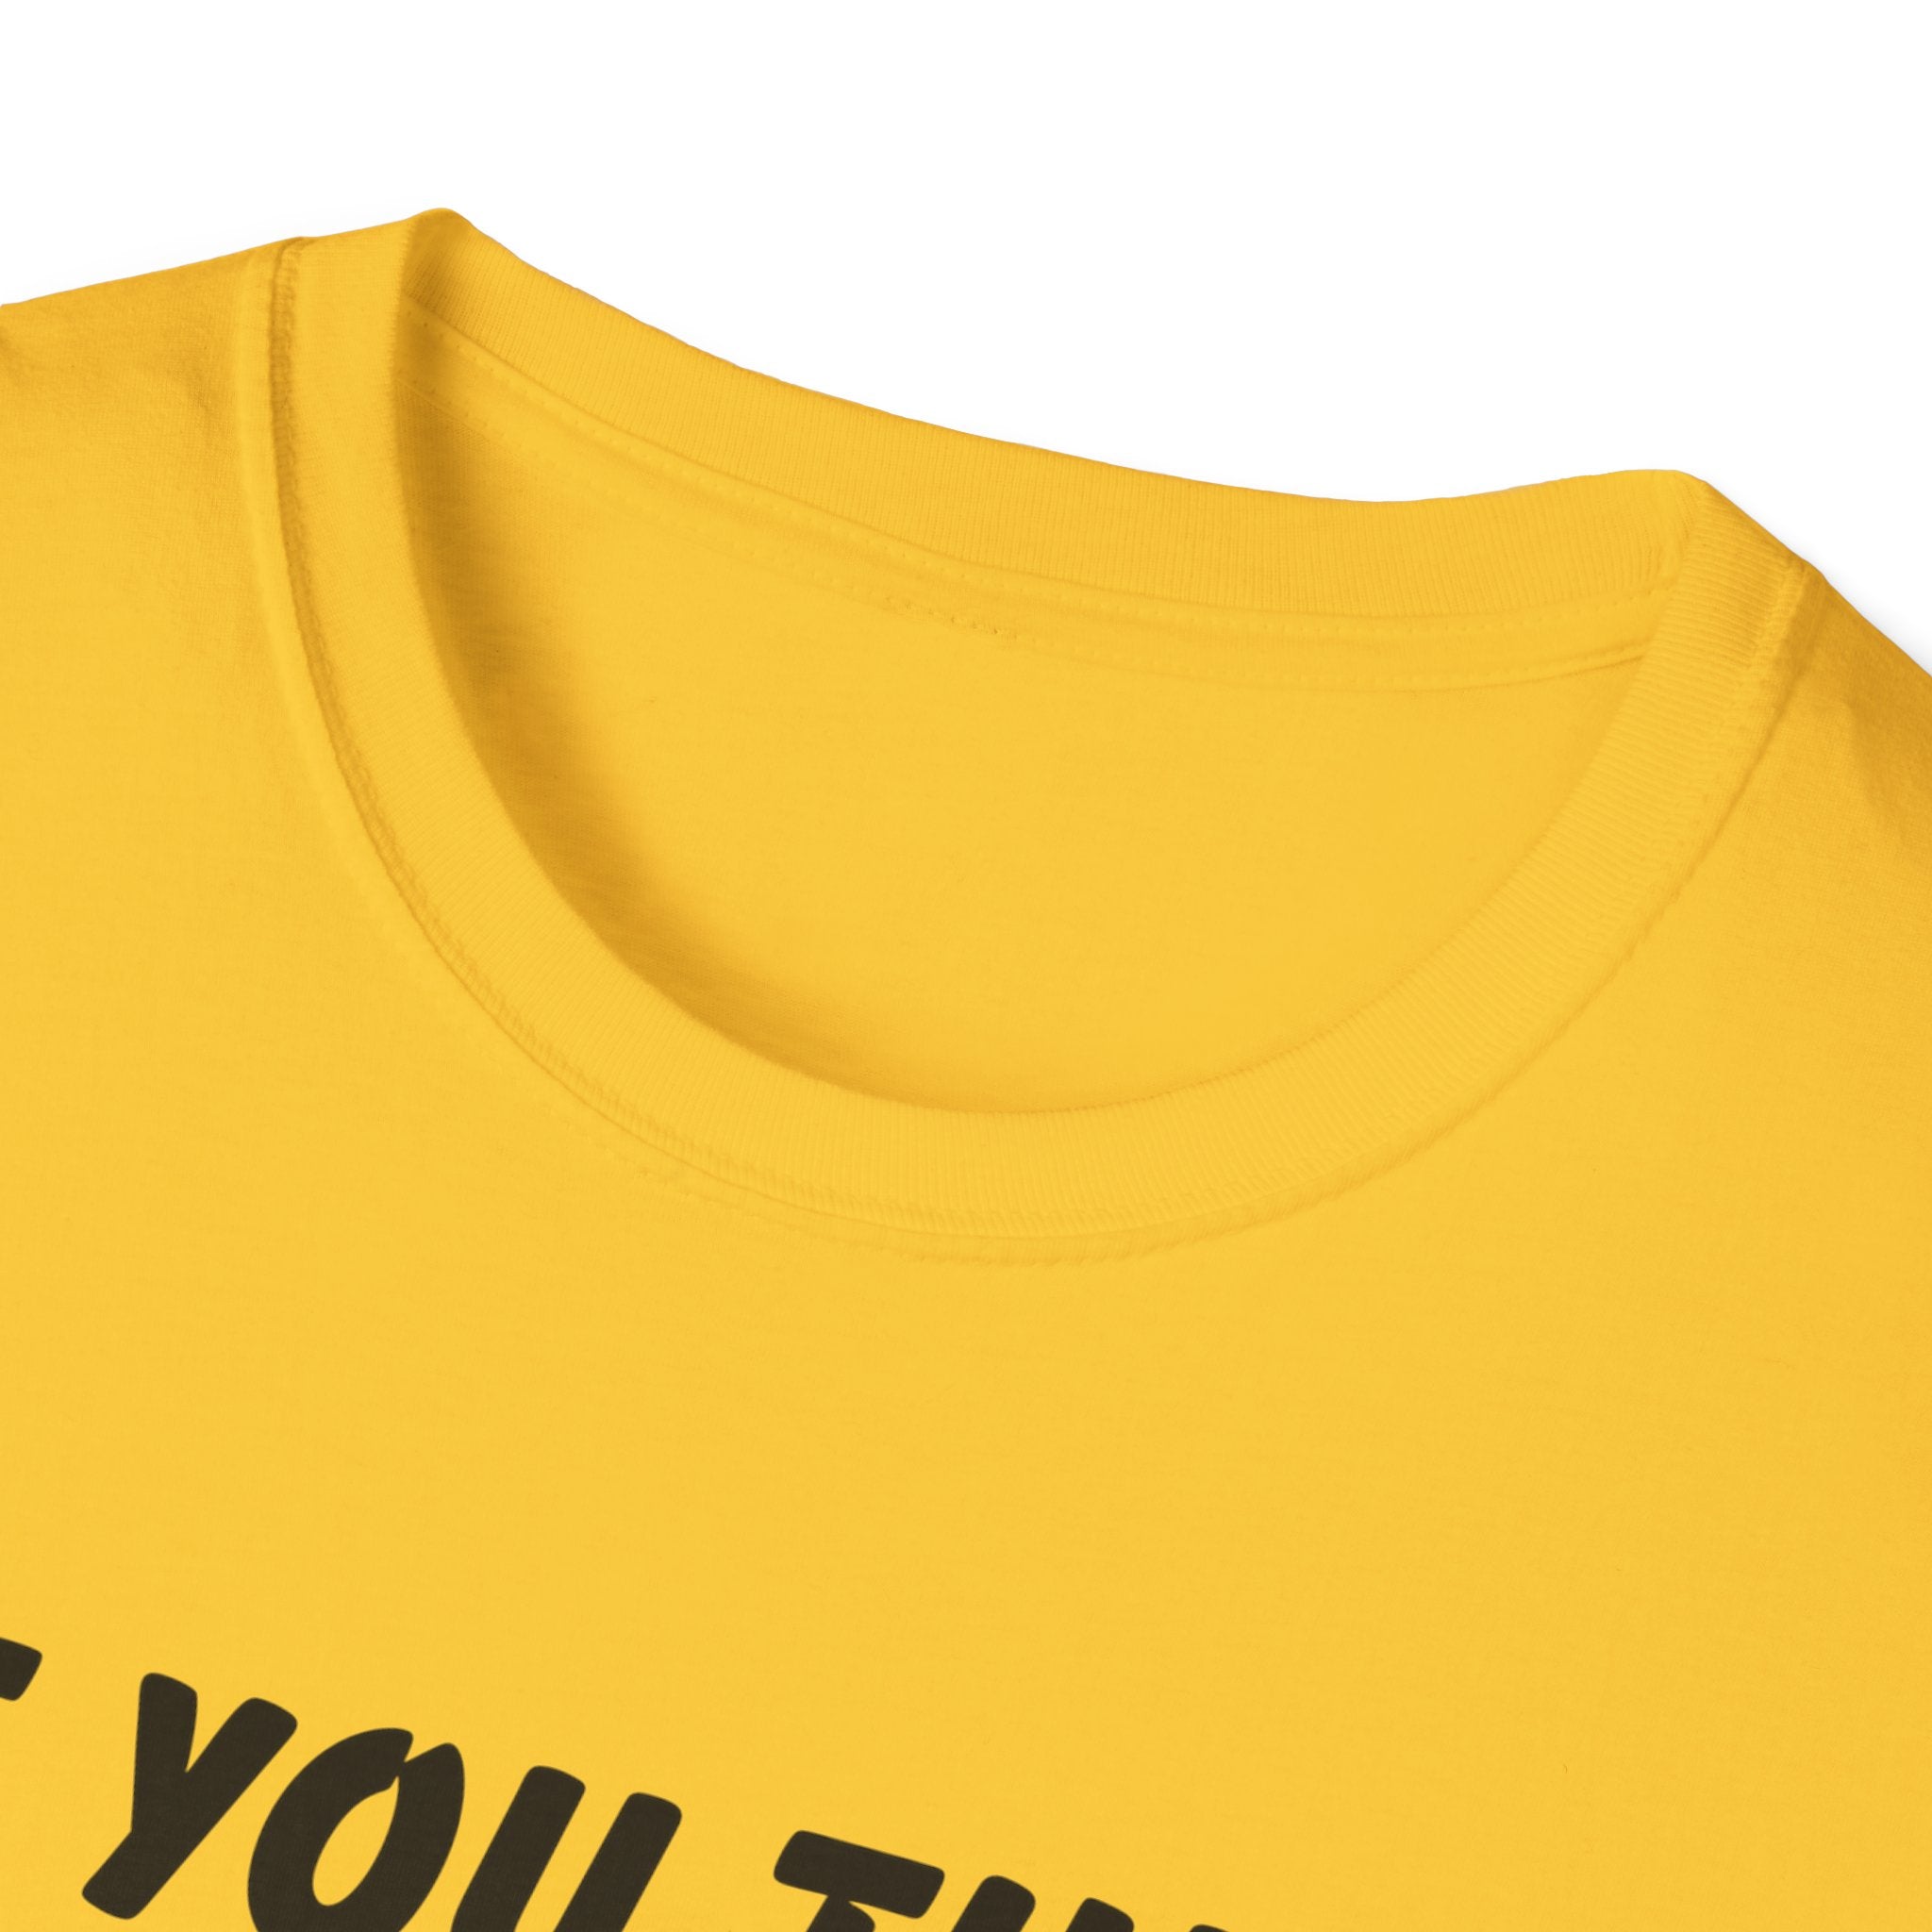 If You Think You Can Motivational Unisex Softstyle T-Shirt, Men's T-Shirt, Women's T-Shirt